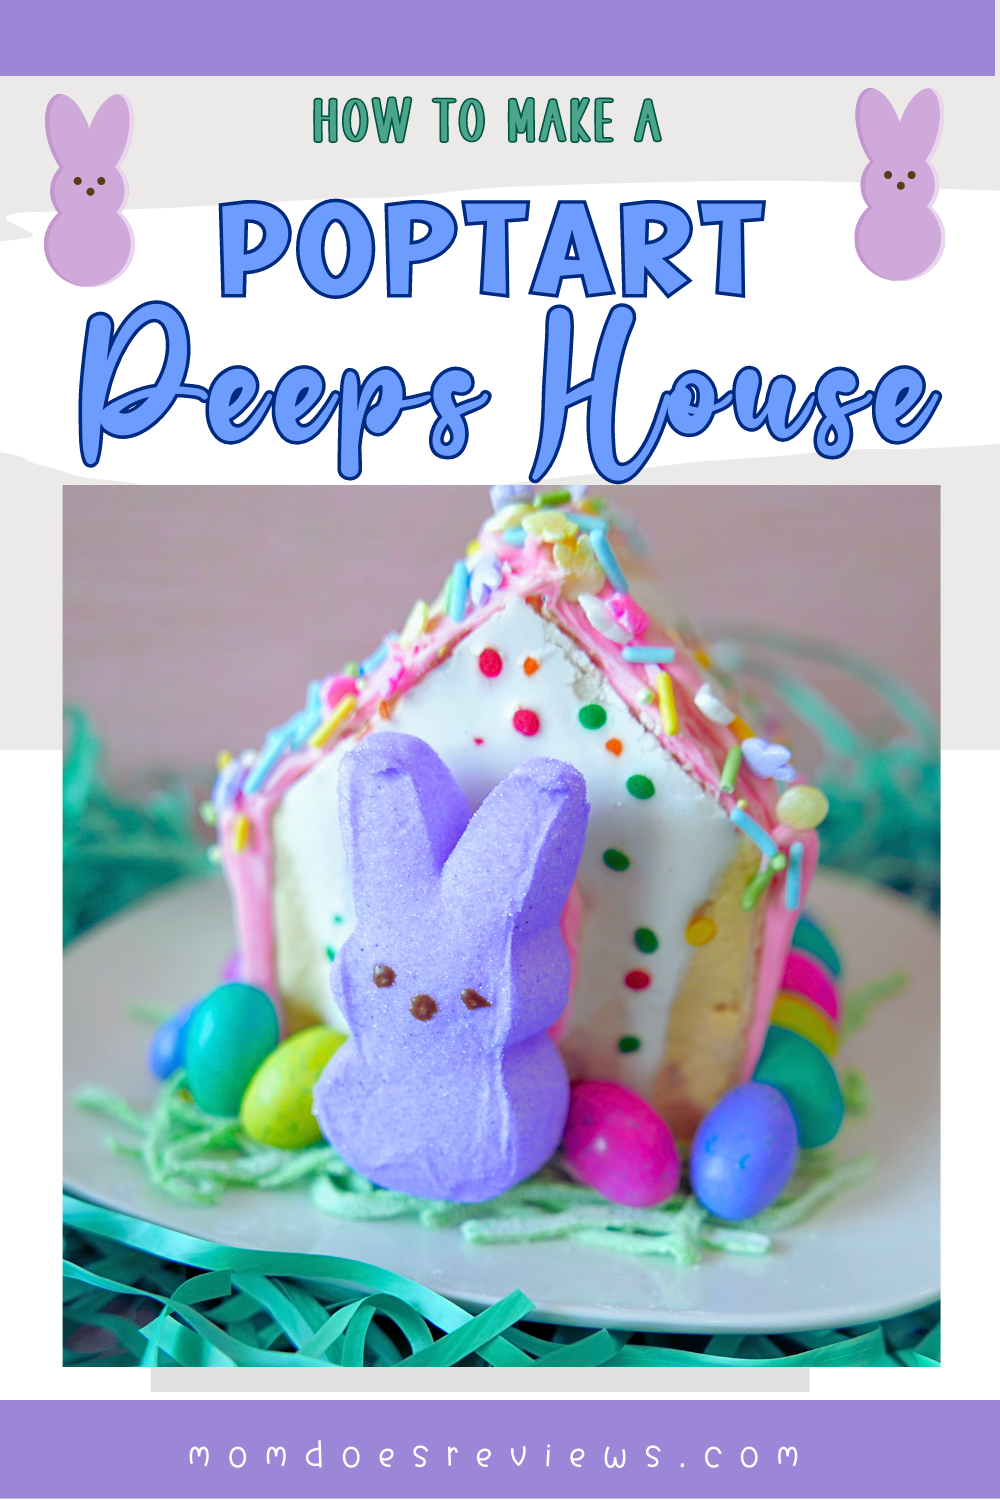 Make a Peeps House with PopTarts